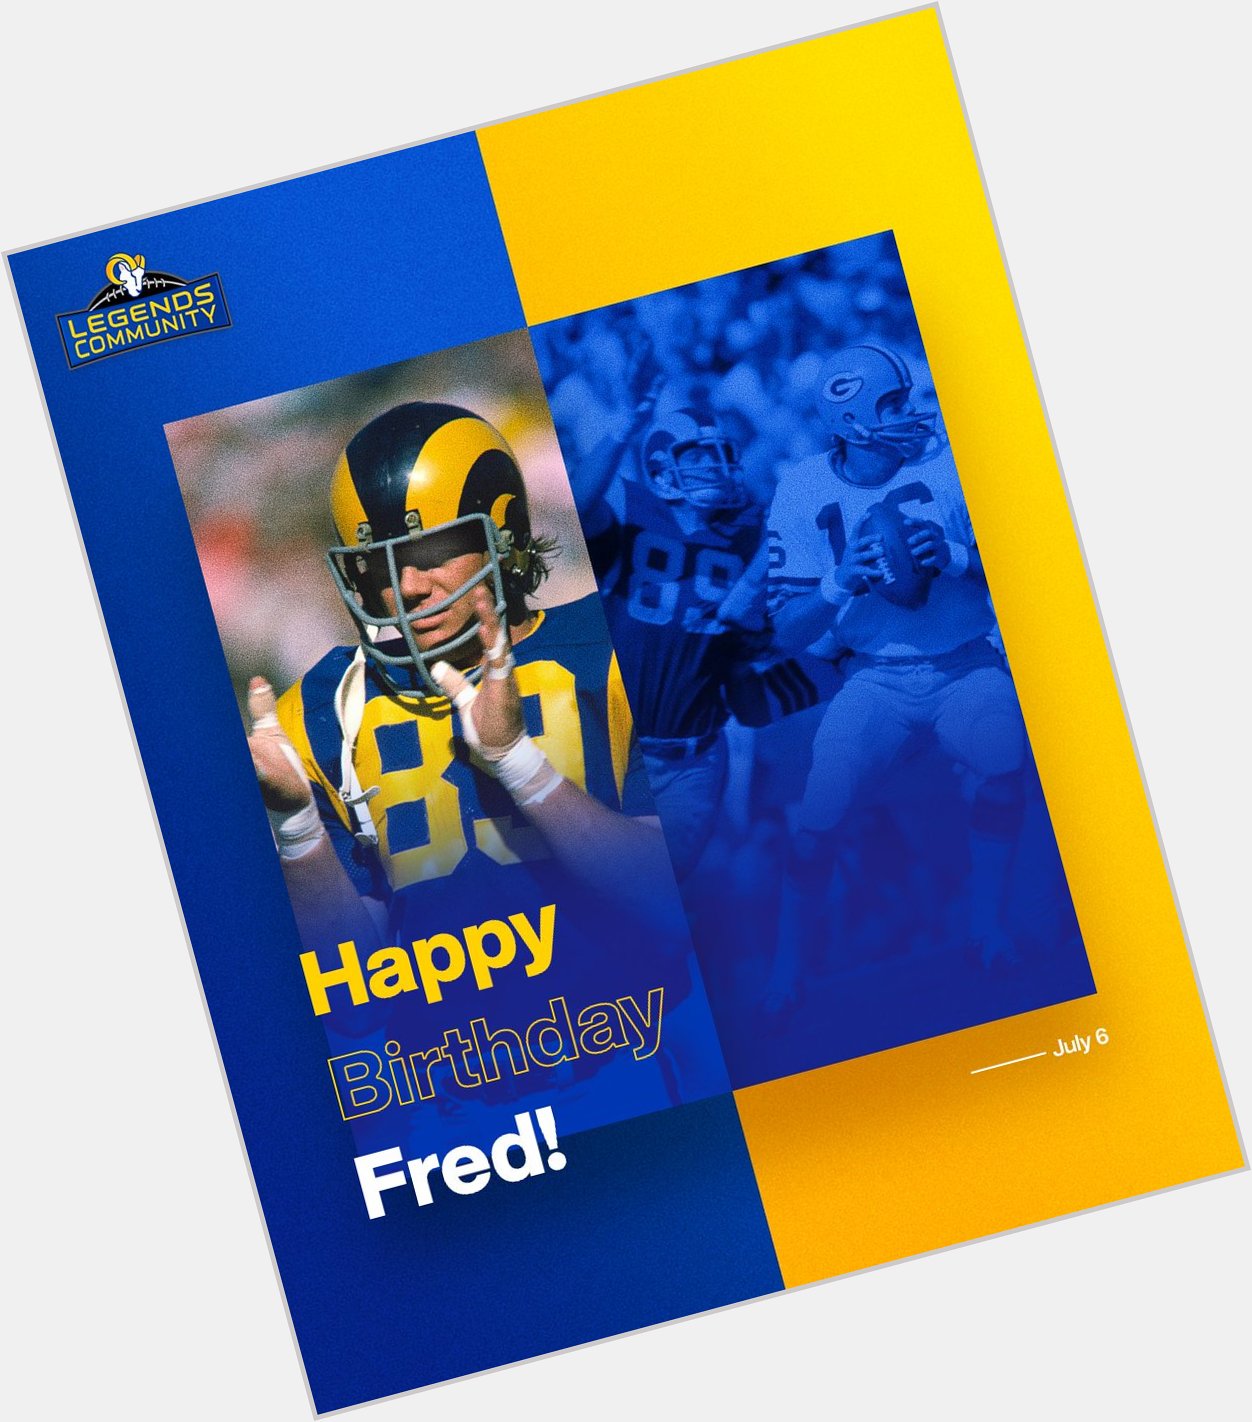 Happy birthday to Fred Dryer! 